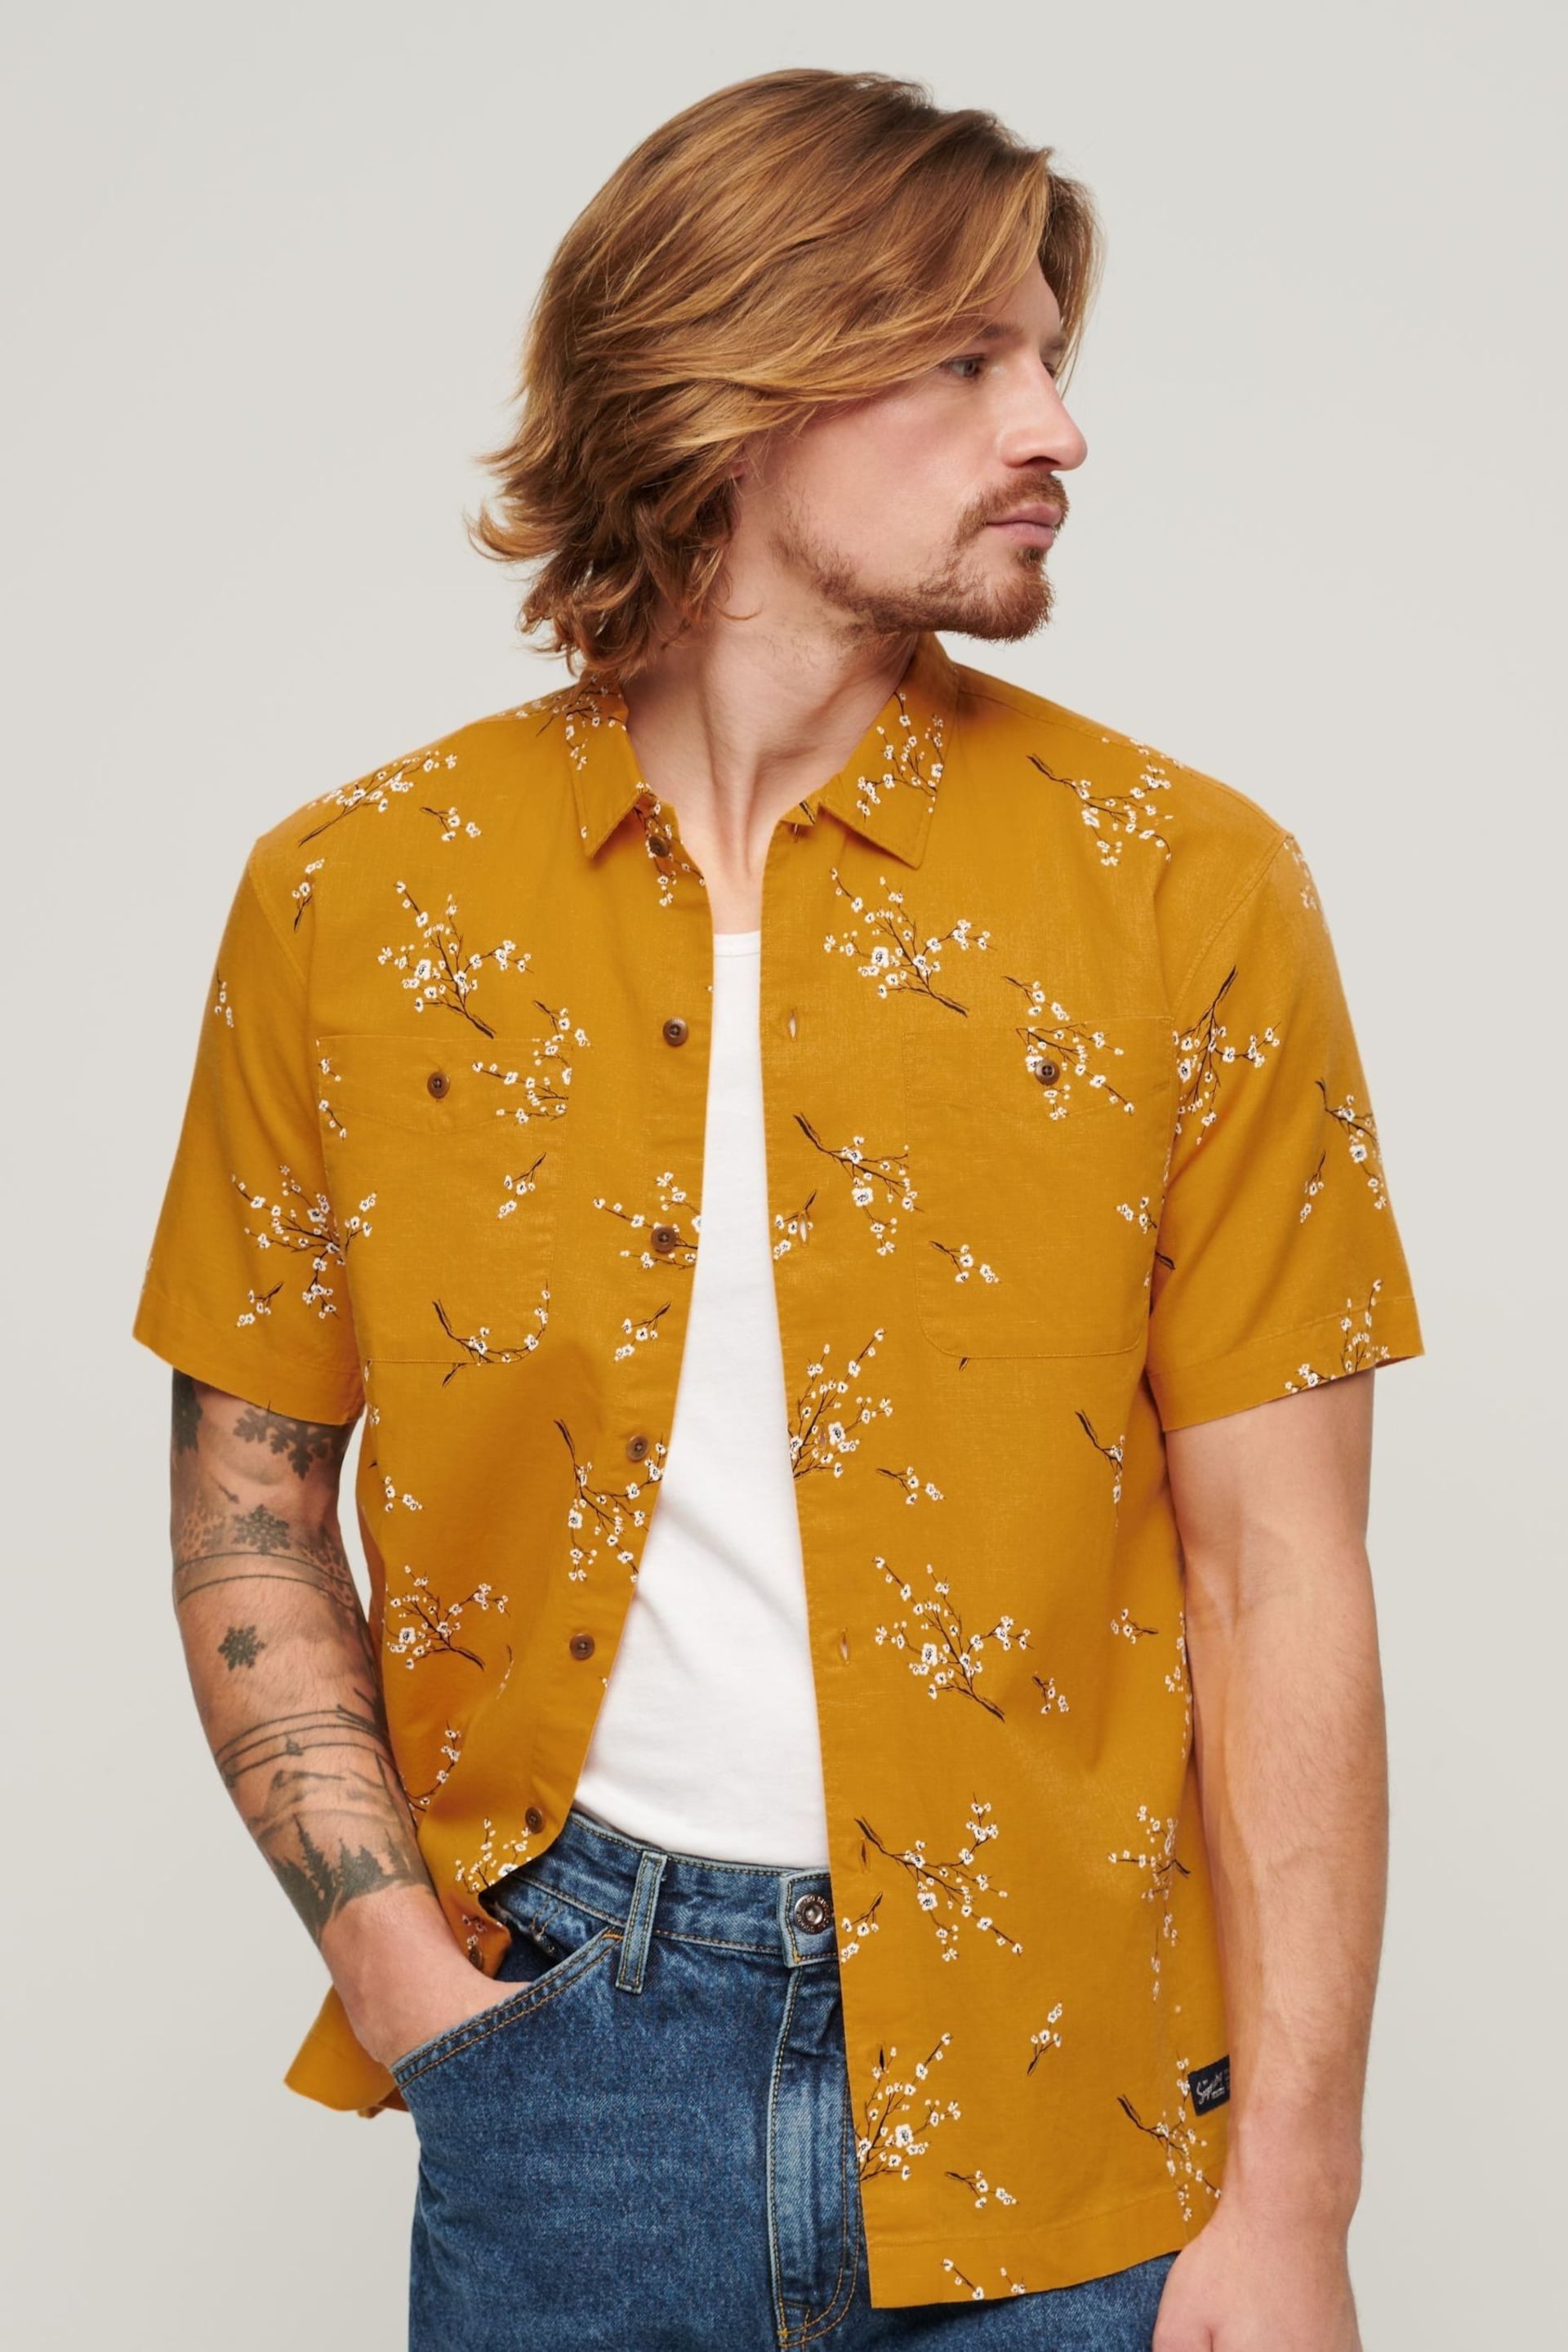 Superdry Golden Blossom Short Sleeved Beach Shirt - Image 1 of 6